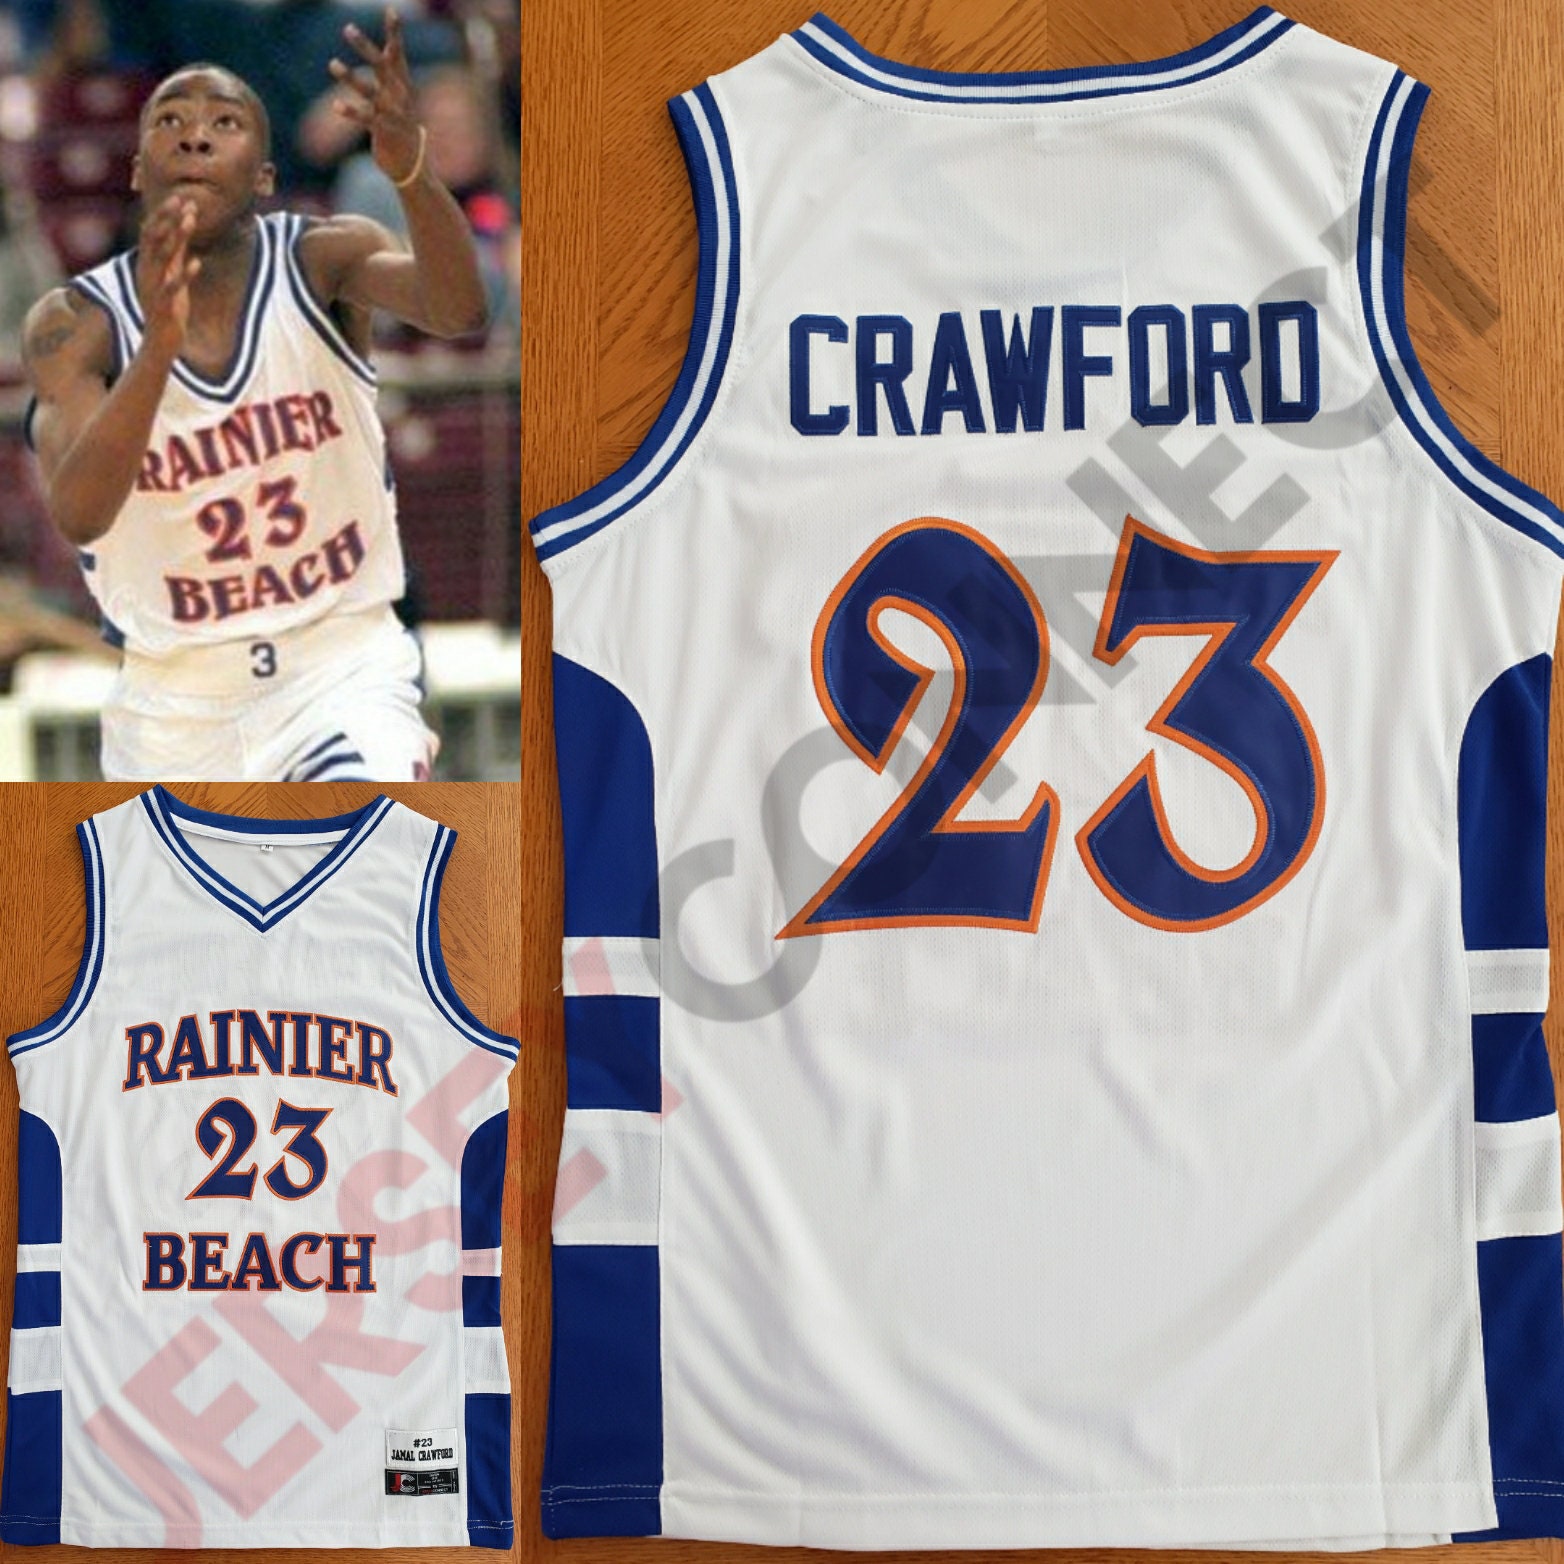 Jamal Crawford Jersey for sale